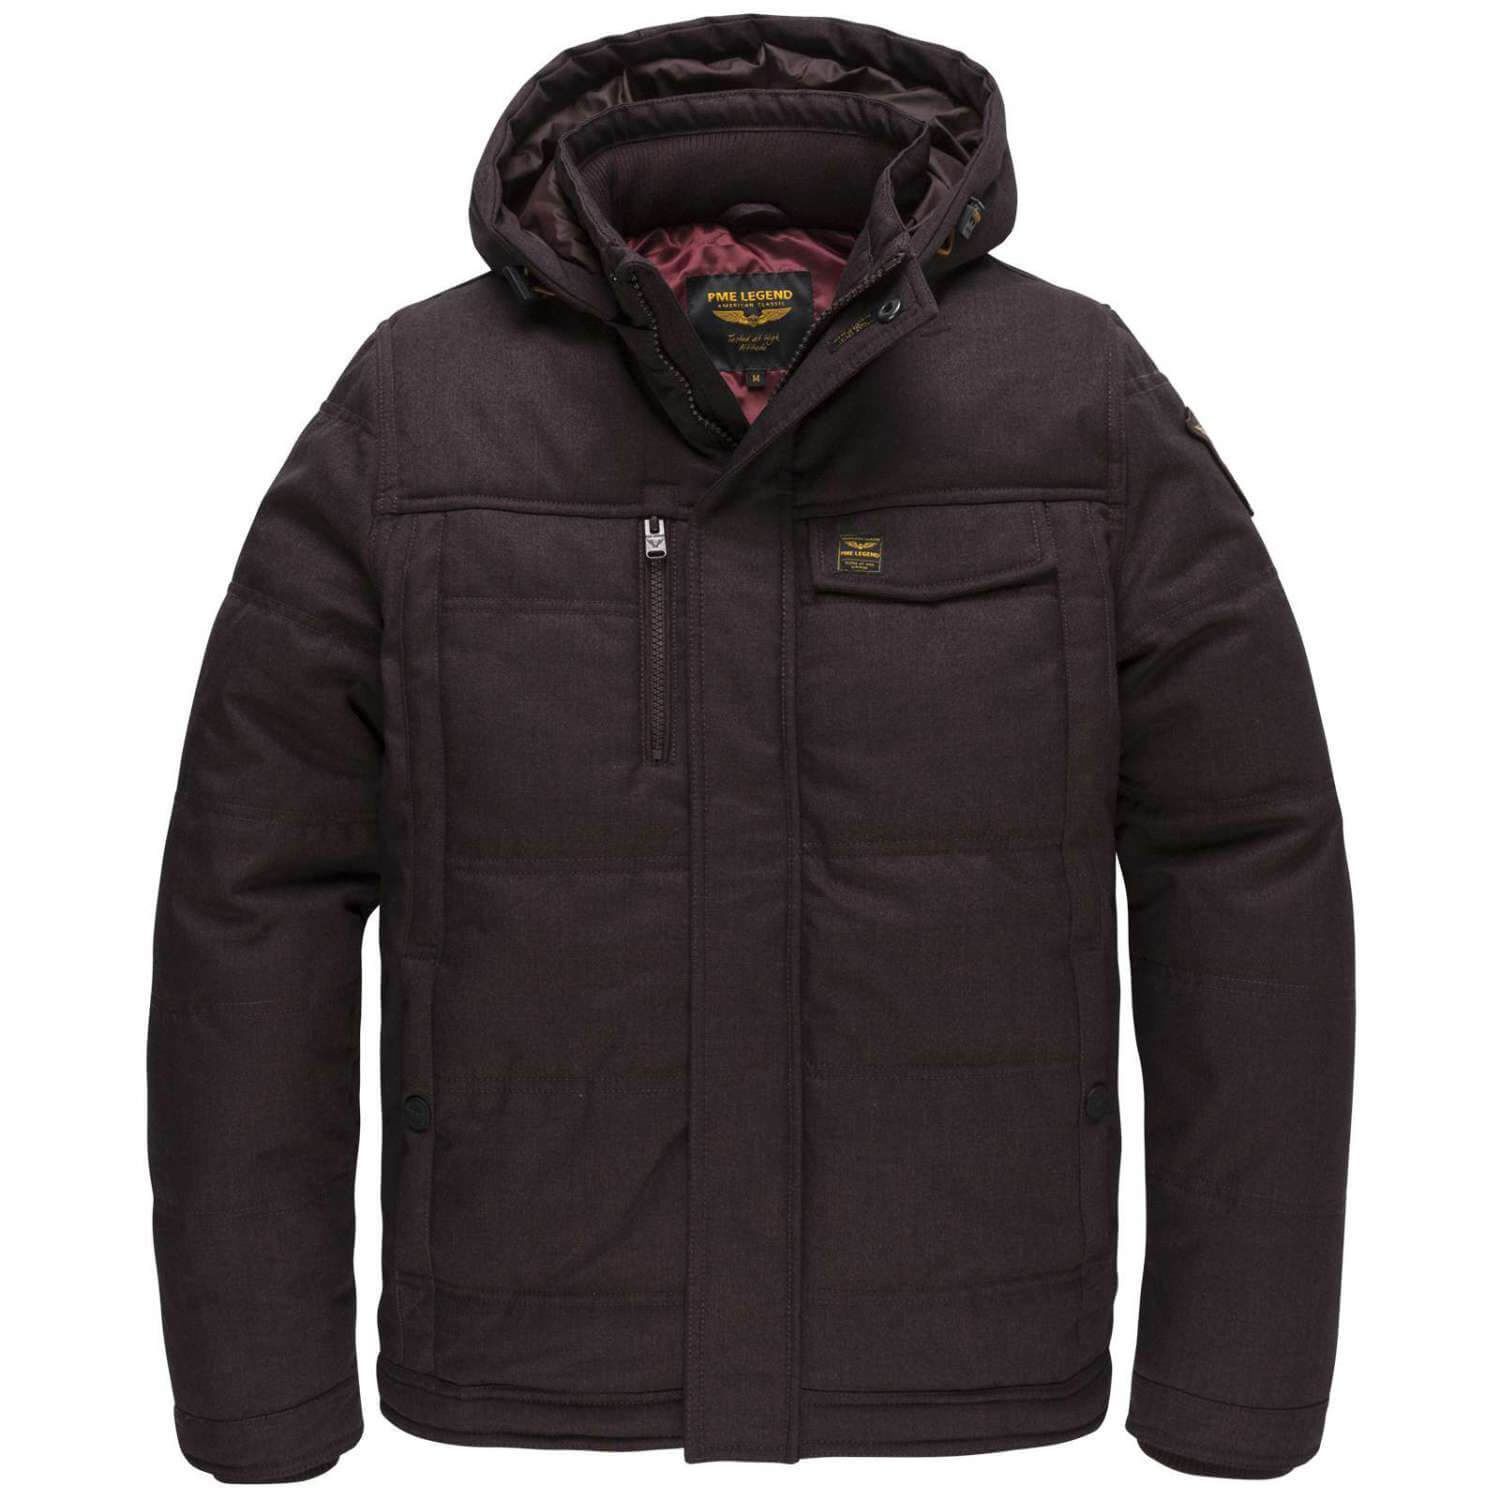 PME Legend zip jacket skyhog decadent cho